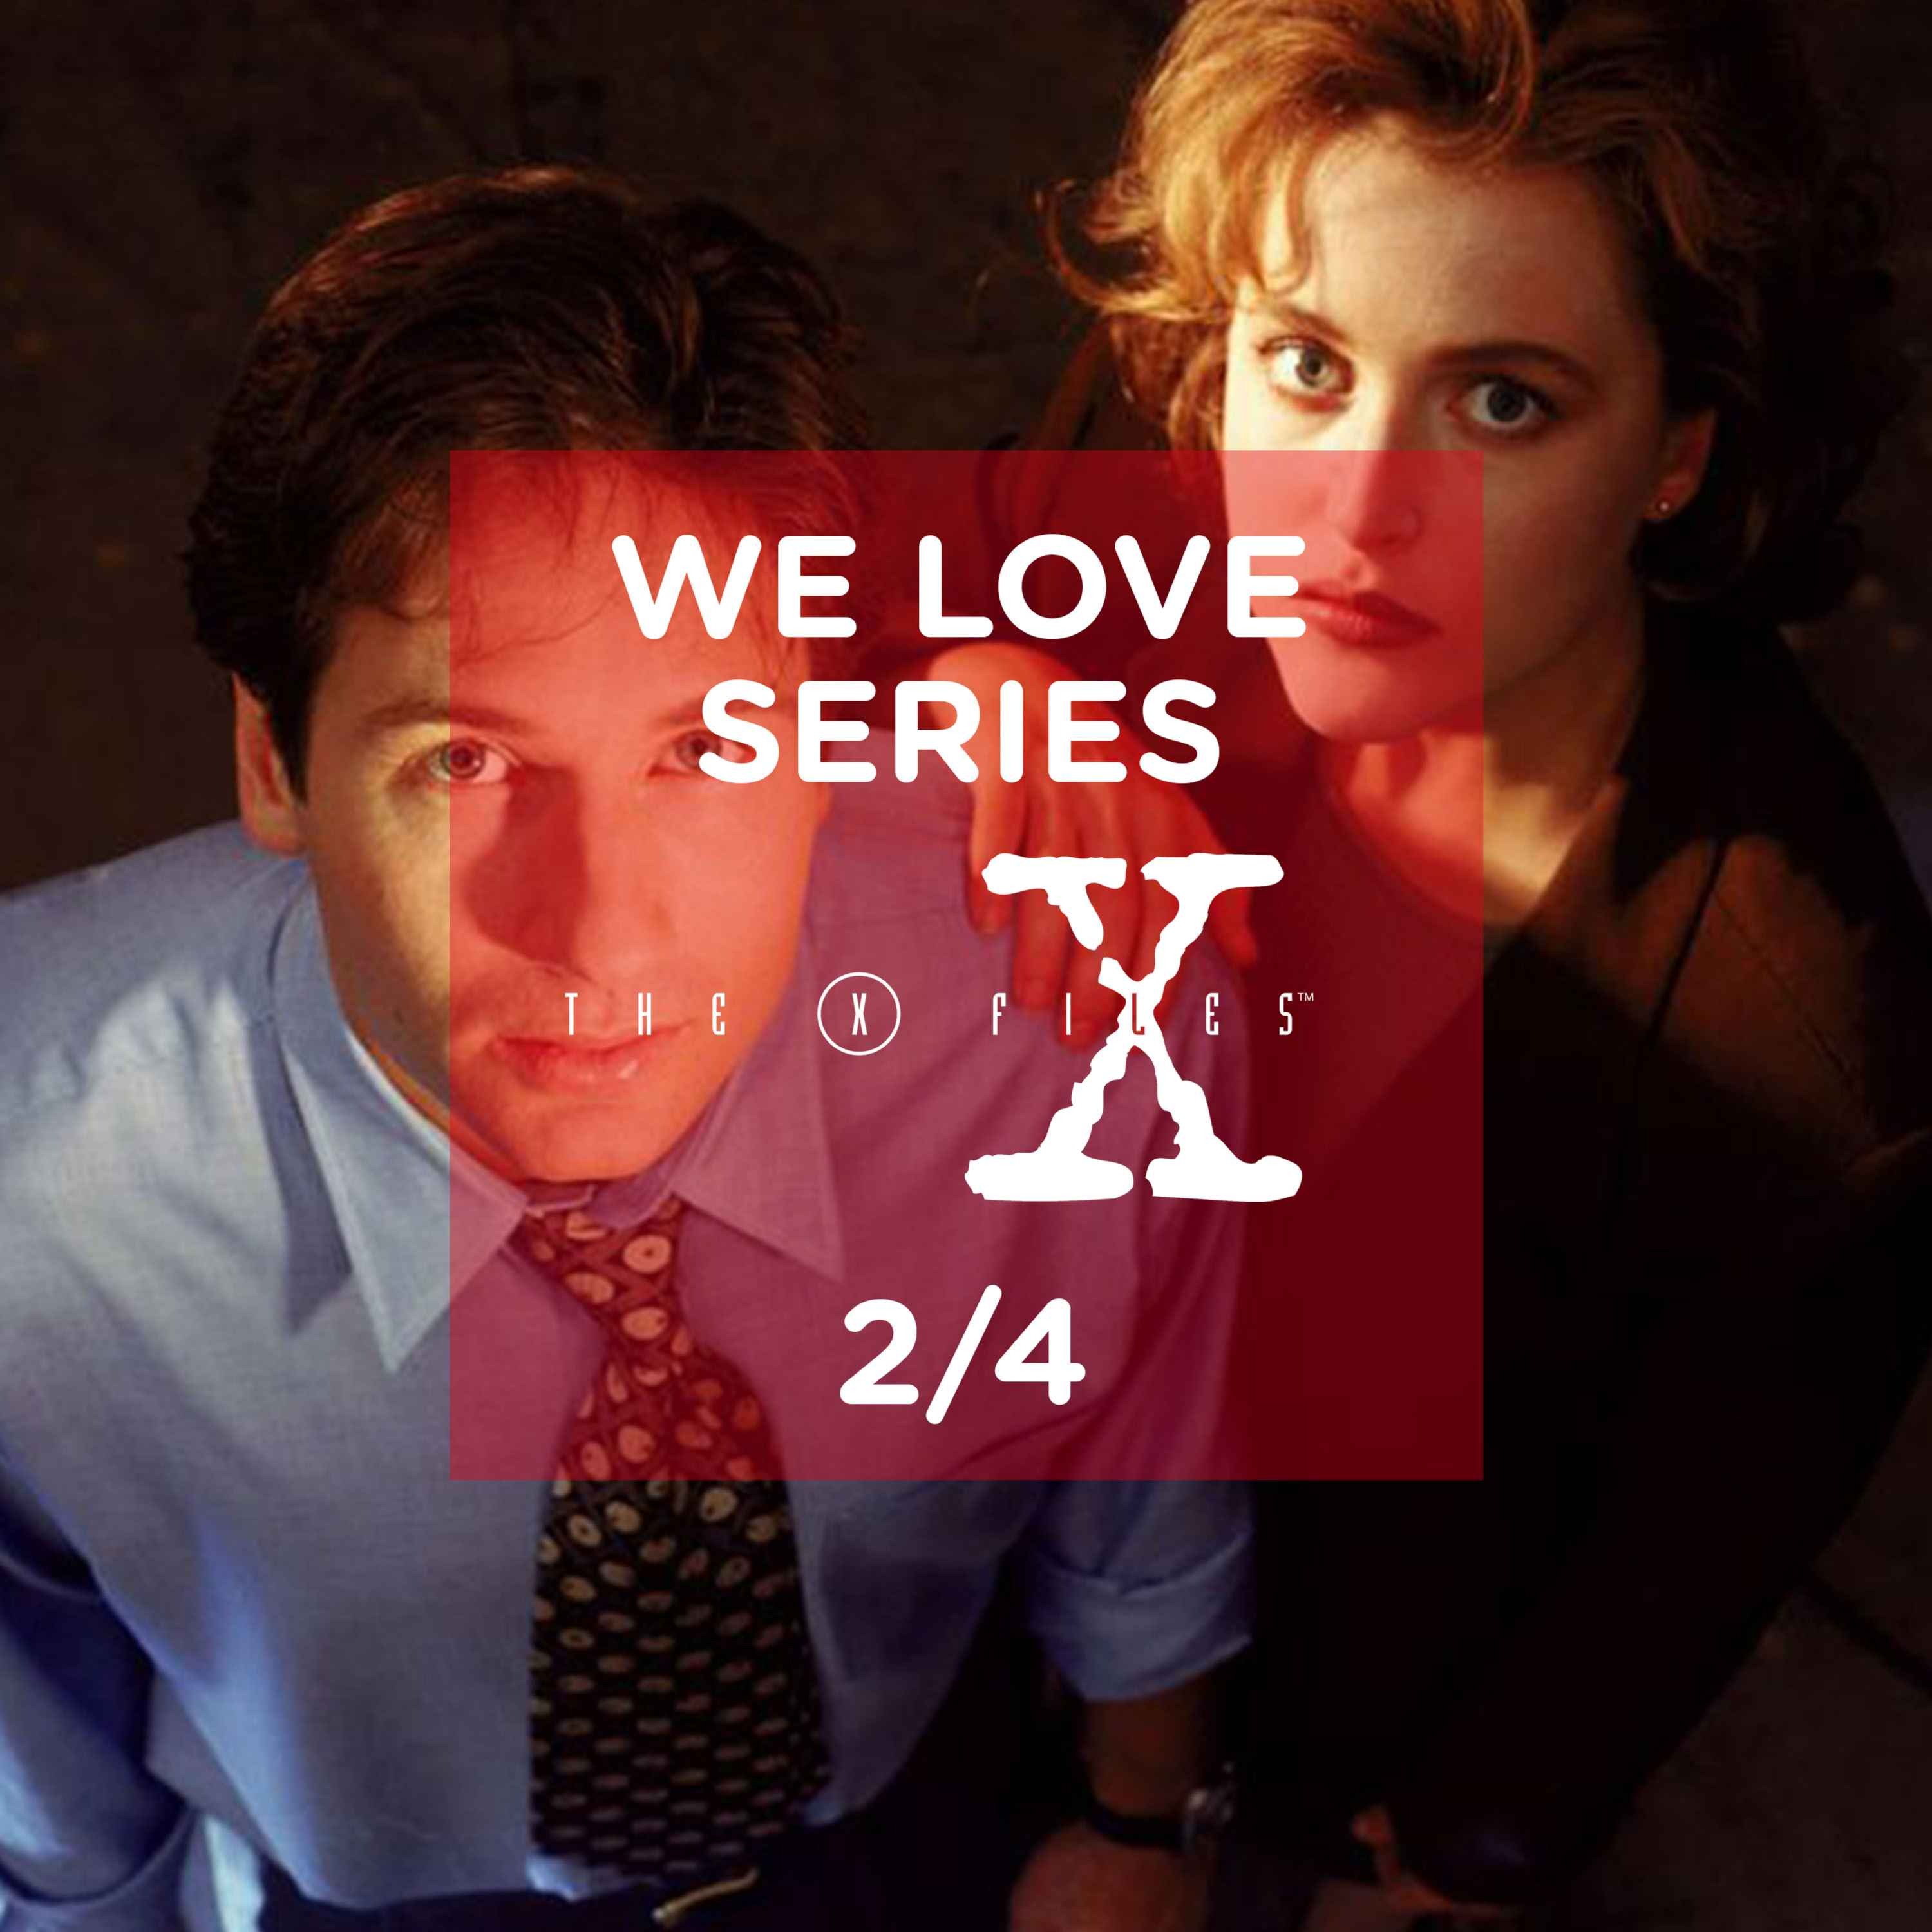 X-Files 2/4